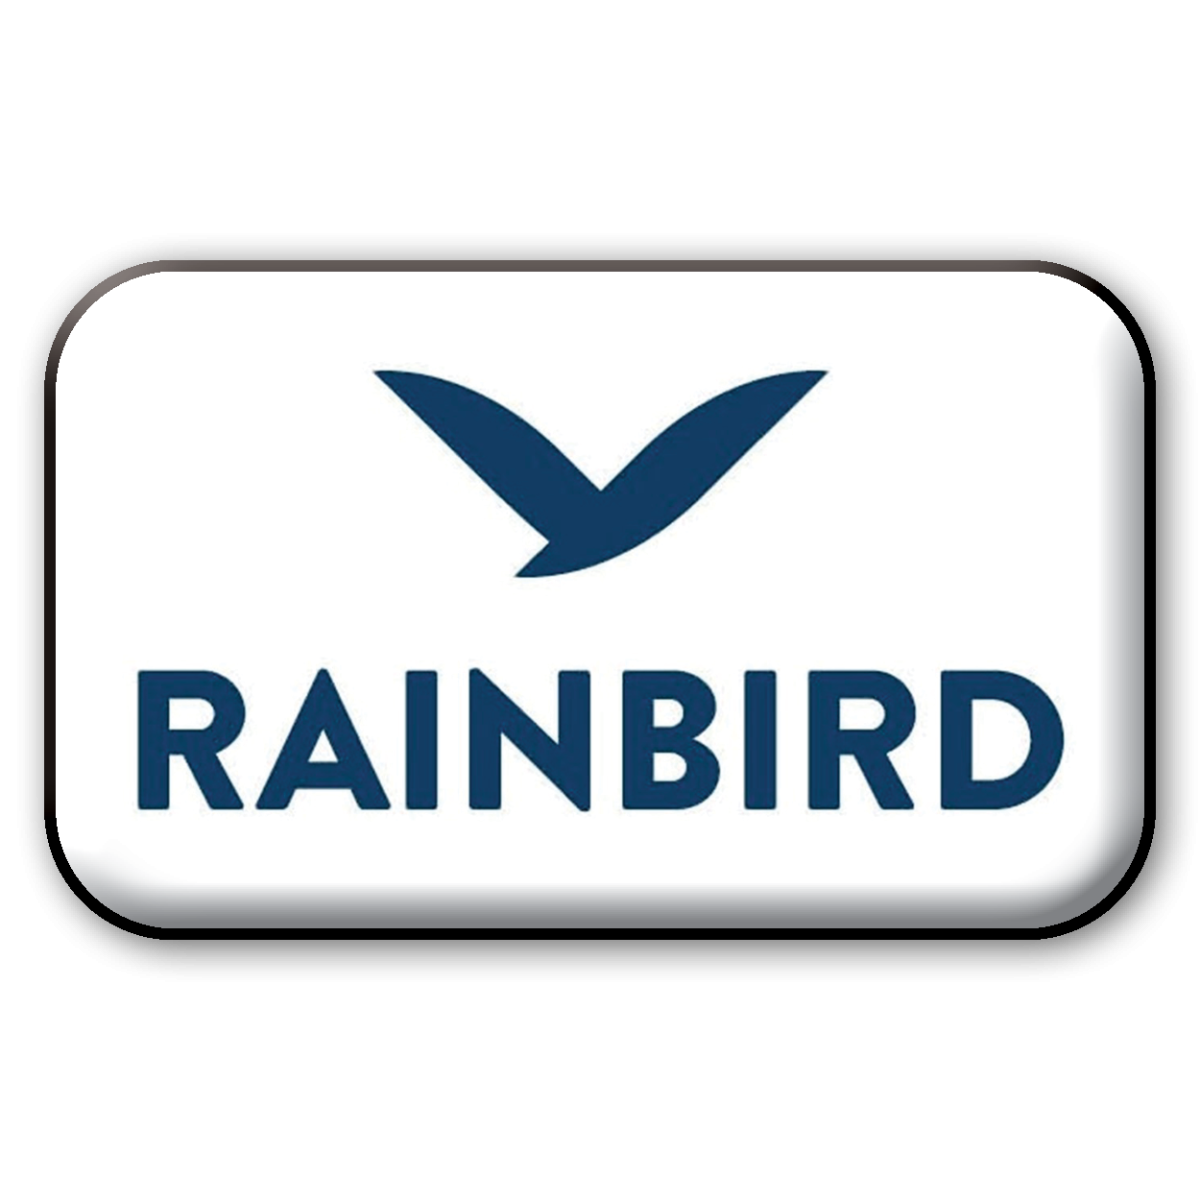 Rainbird beanie